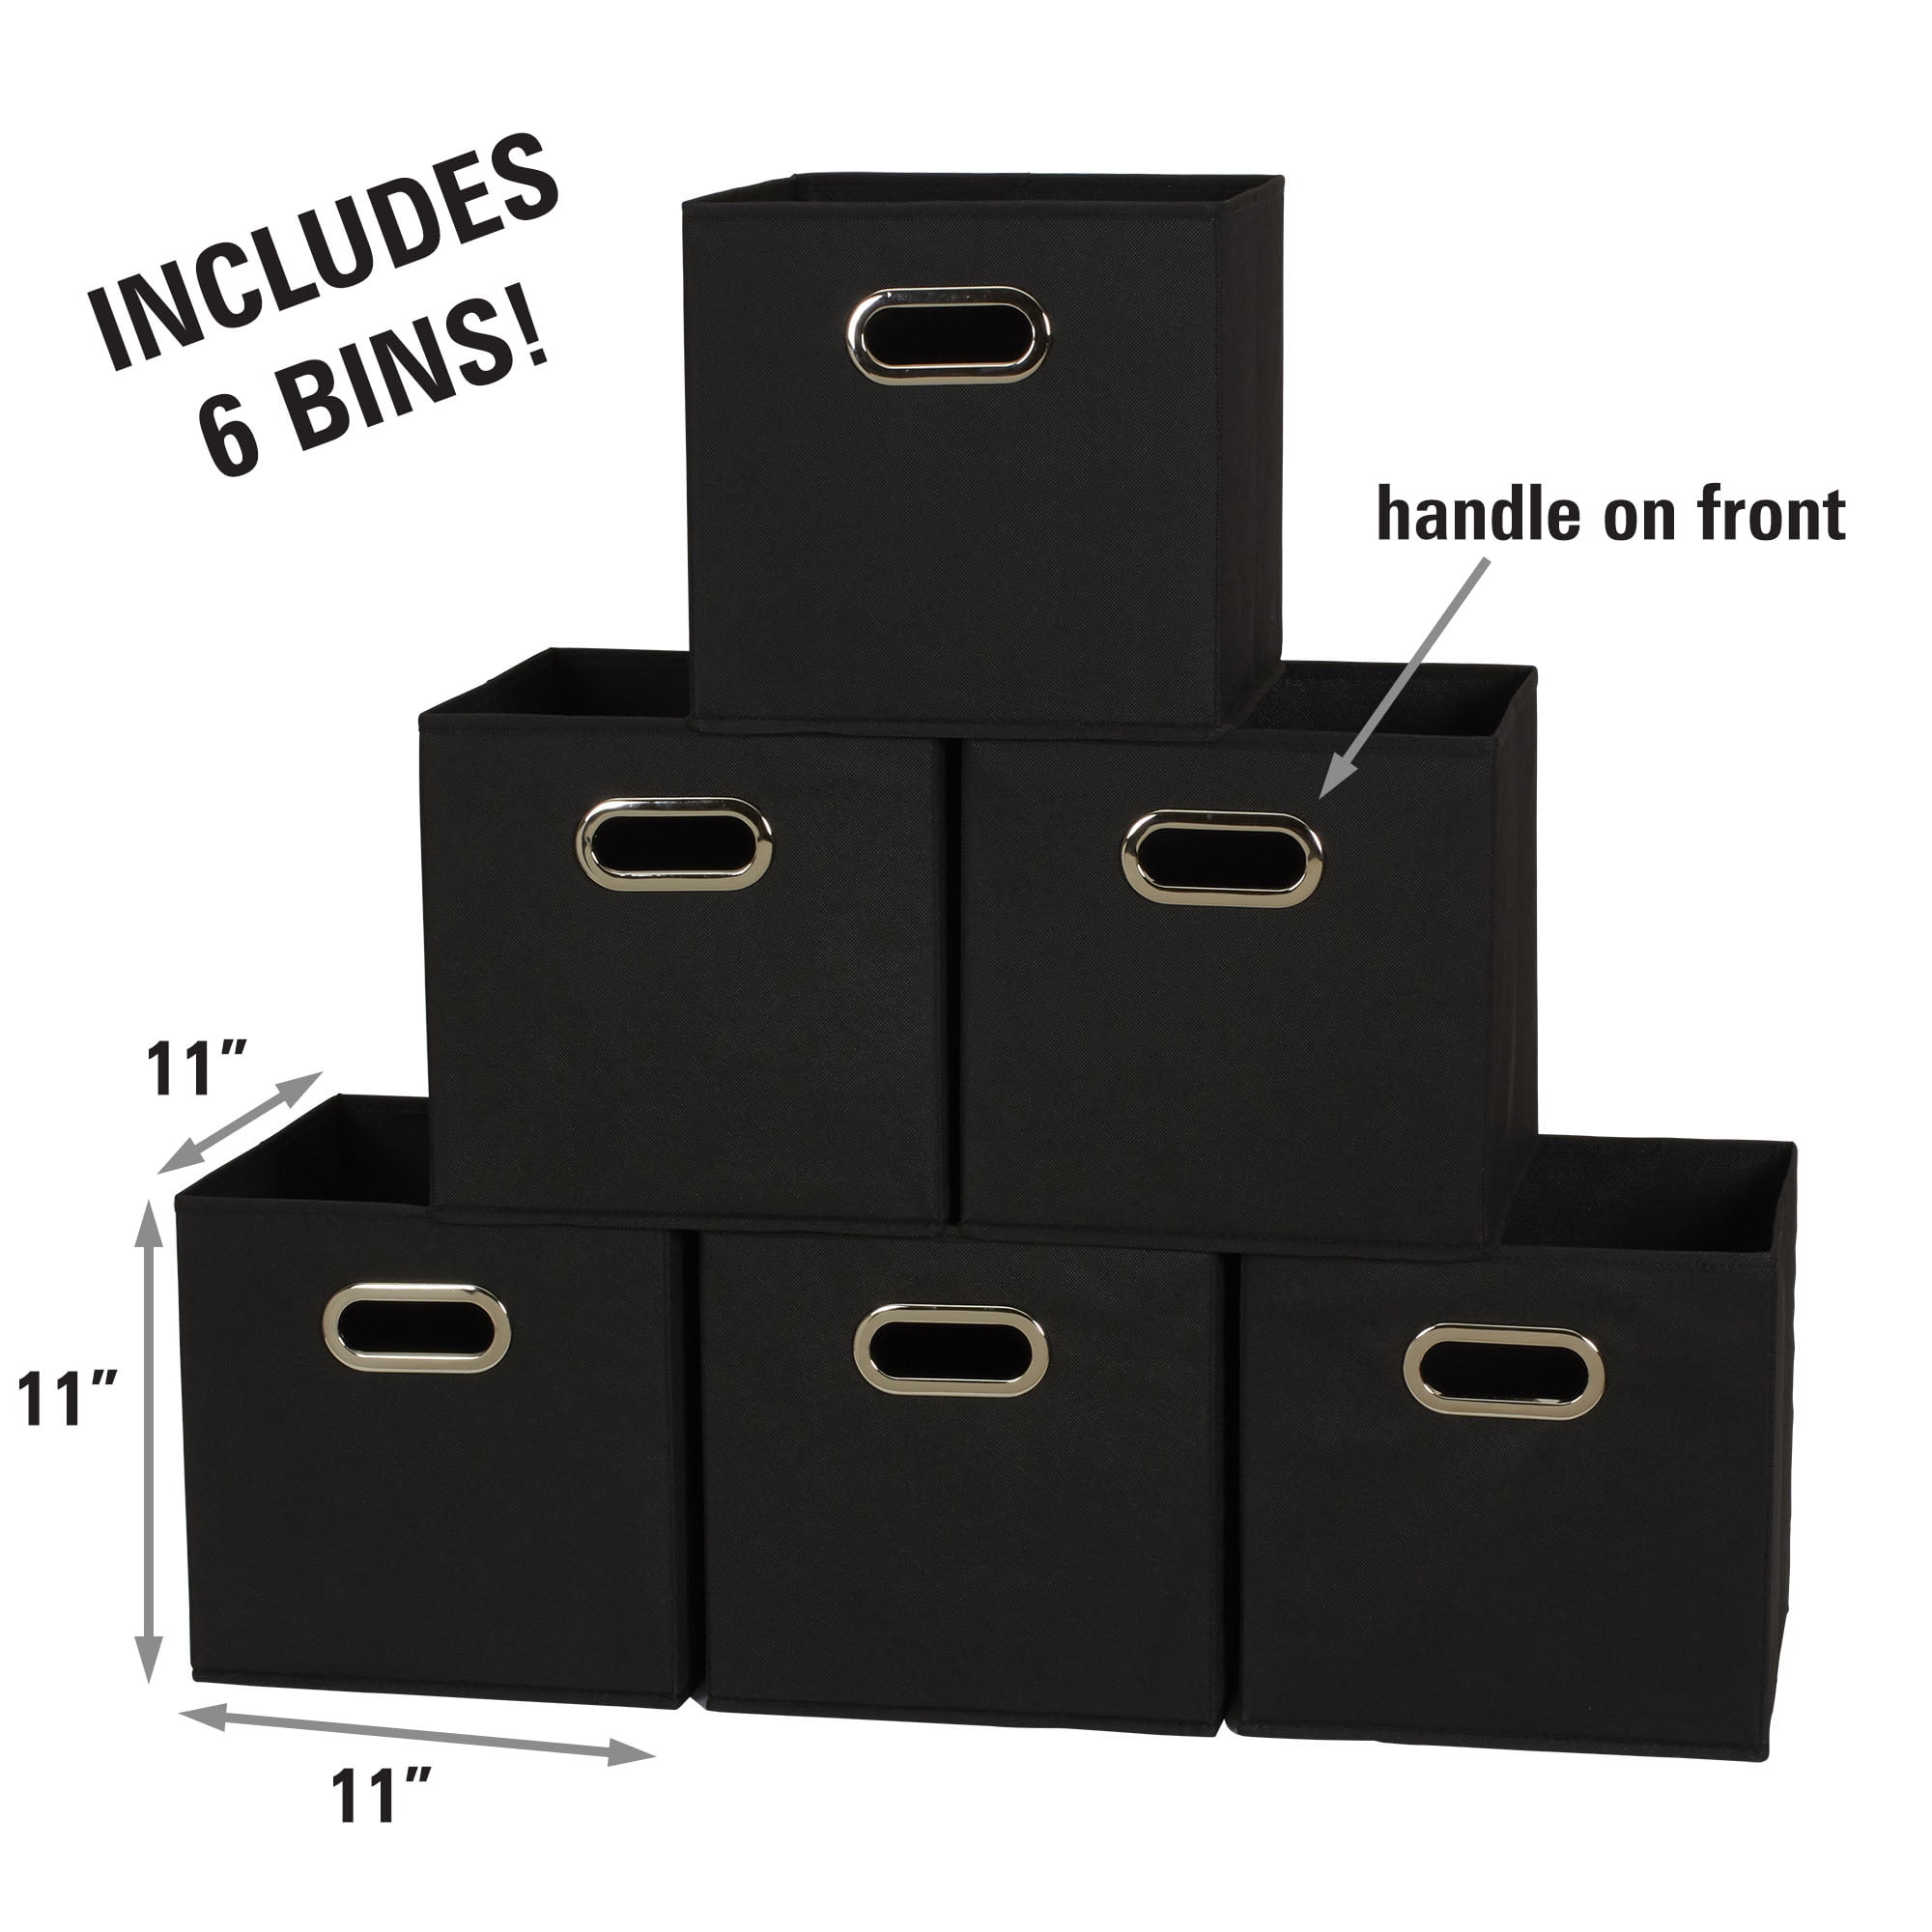 Household Essentials Medium Fabric Storage Bins with Lids, Black, Set of 2